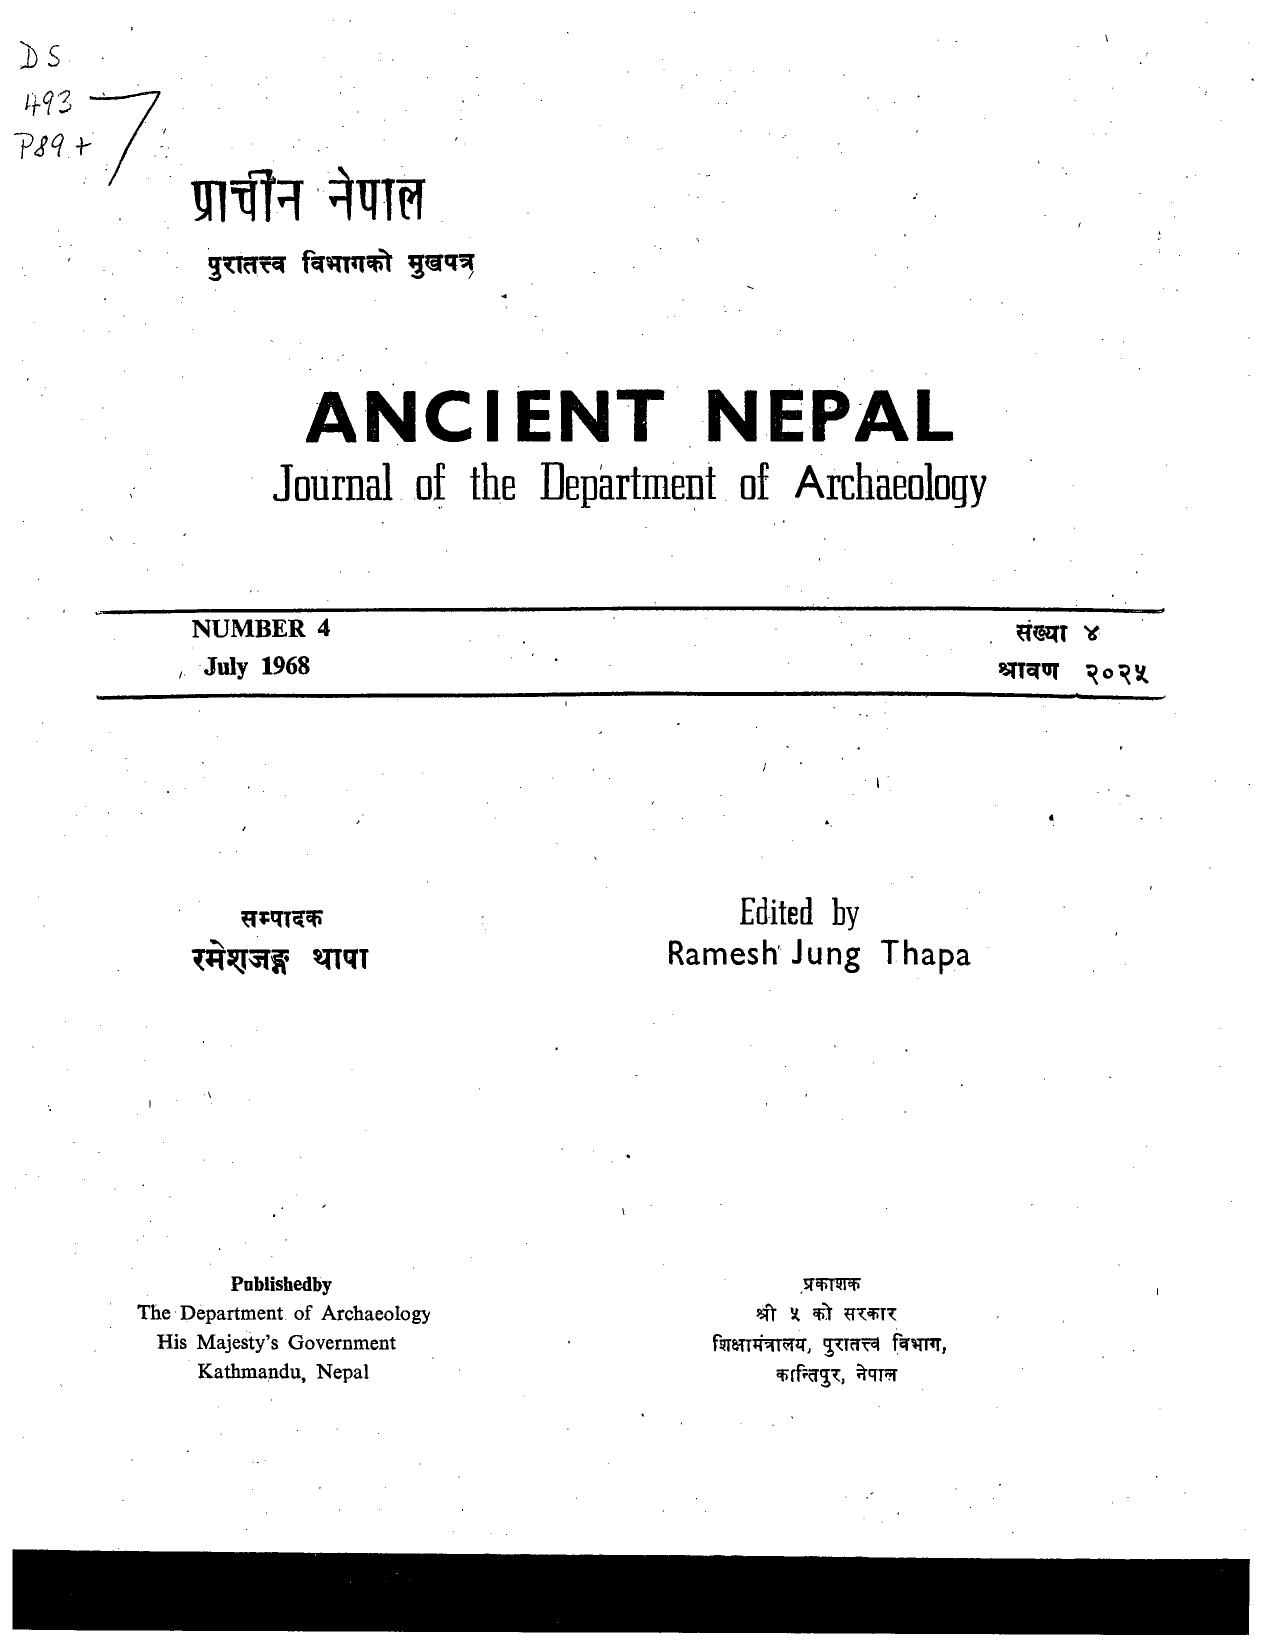 Ancient Nepal 04